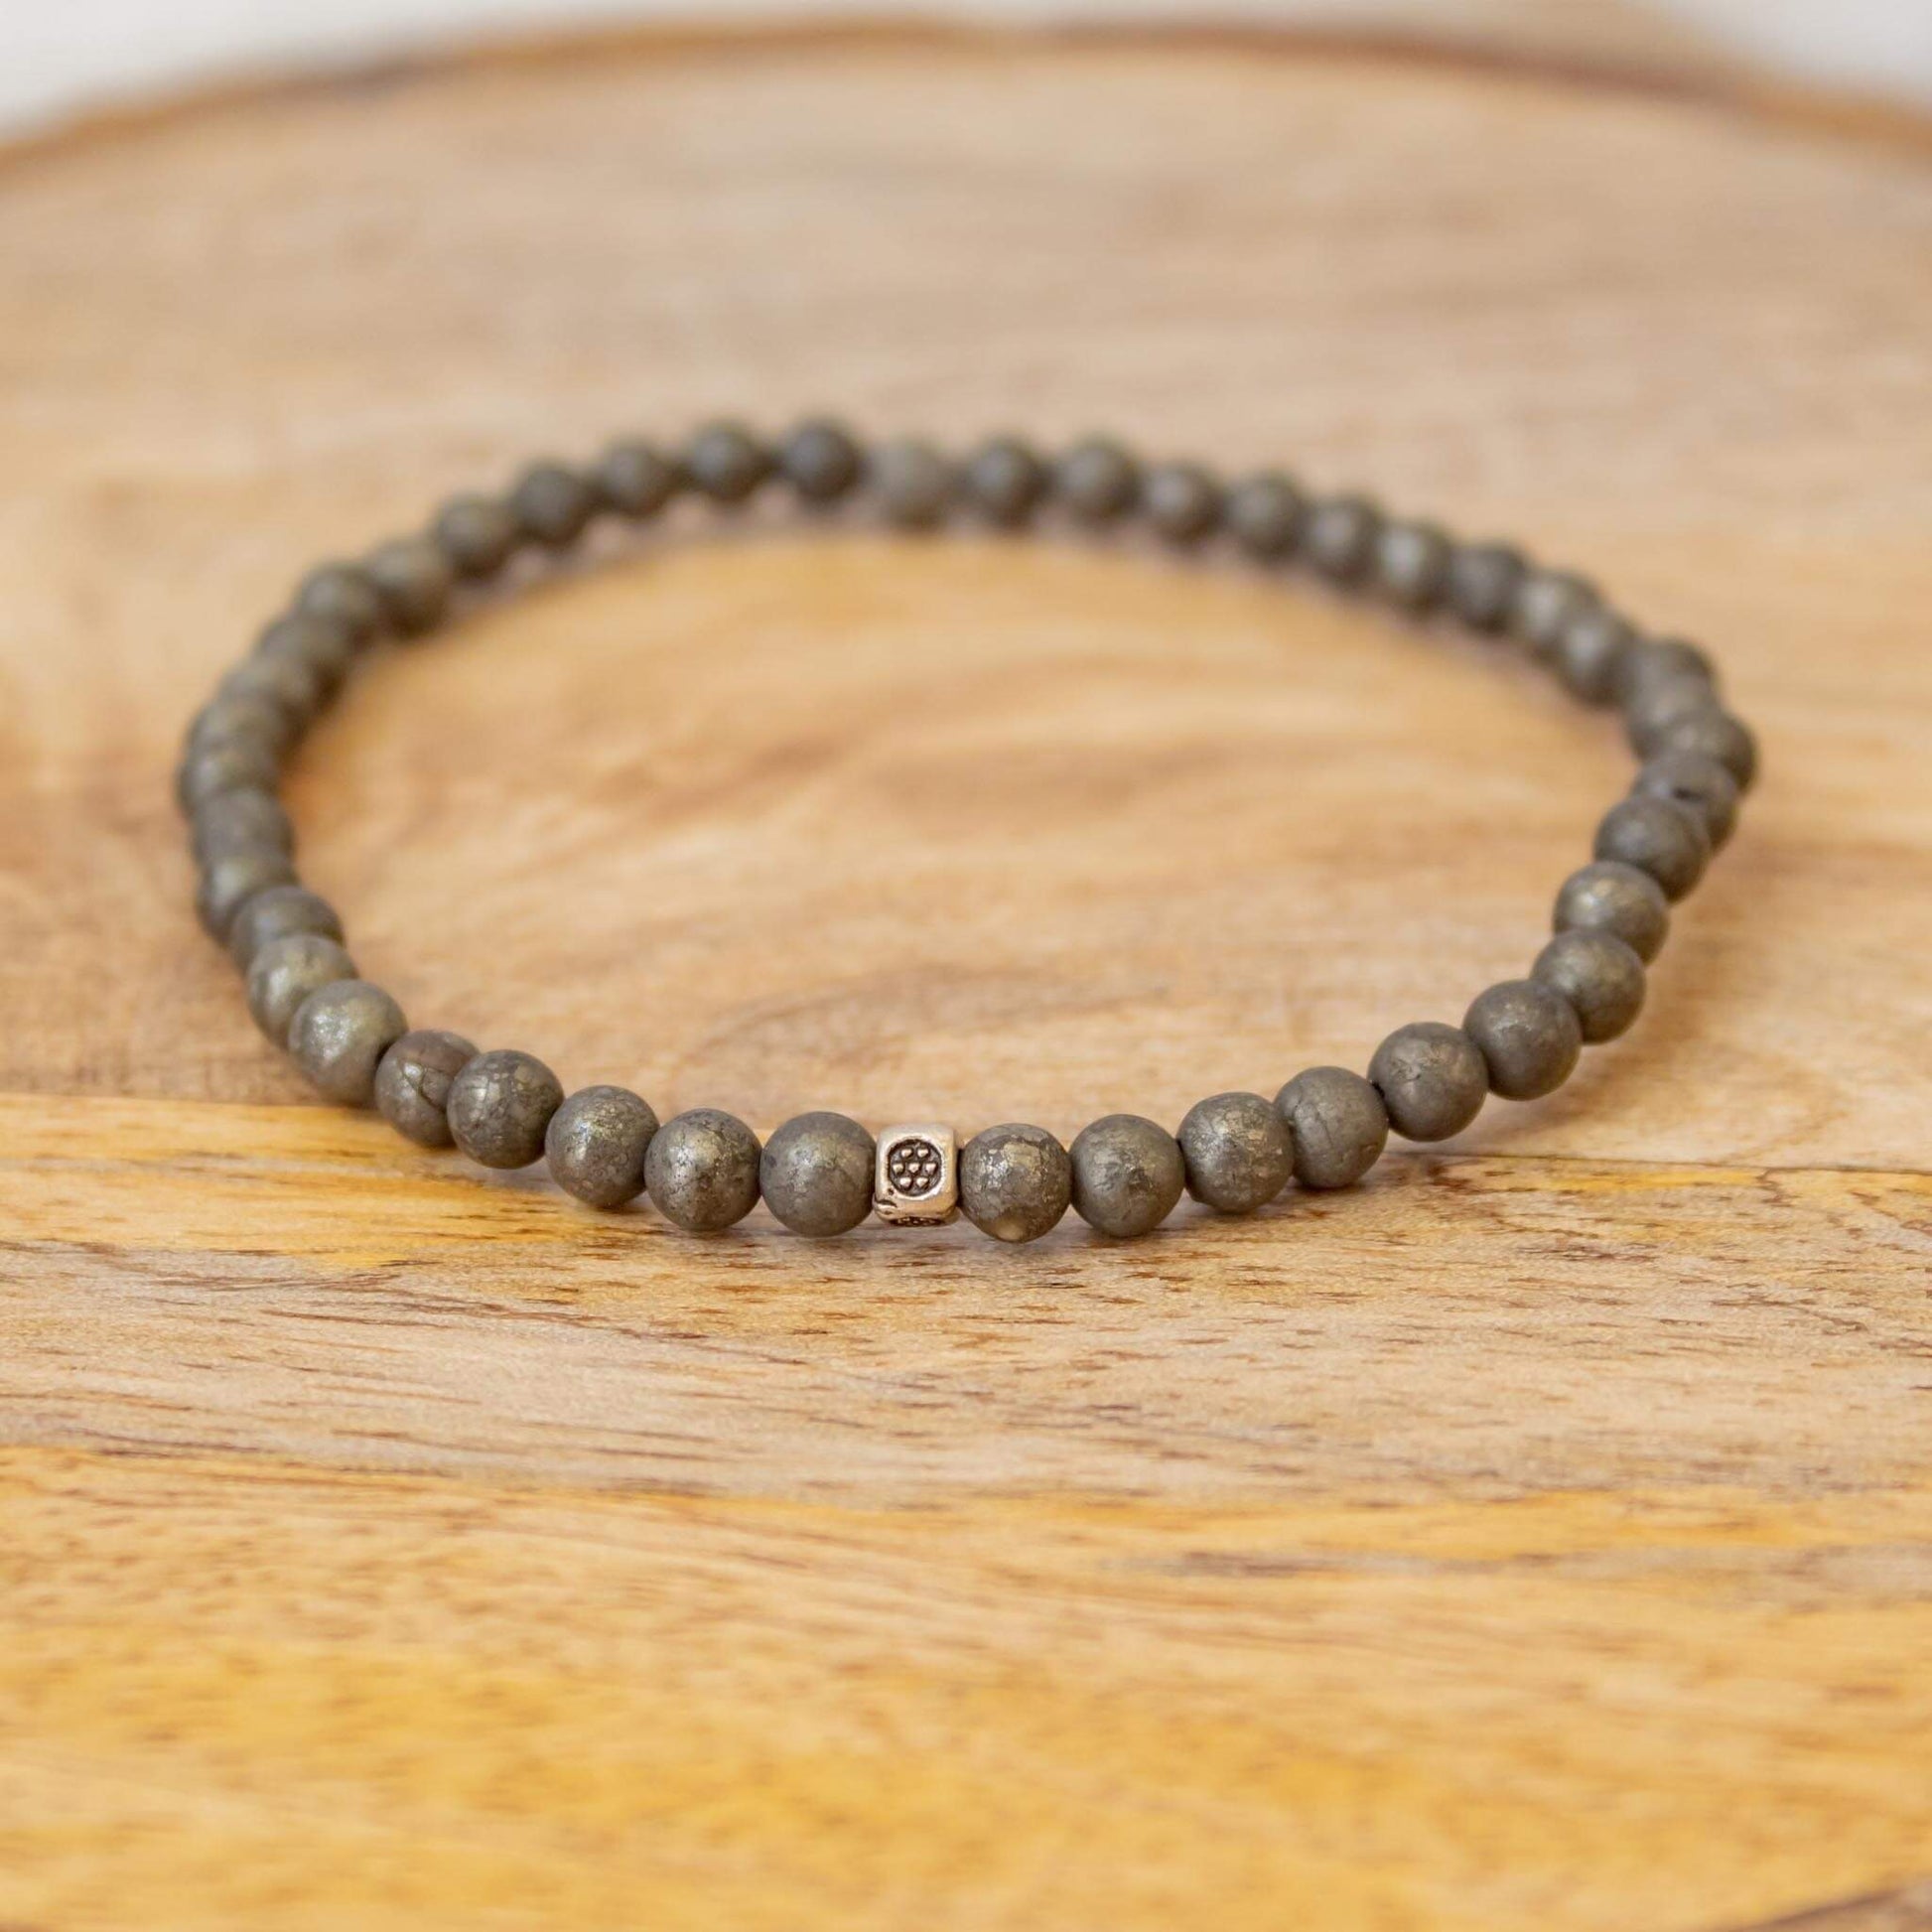 4mm pyrite bead bracelet